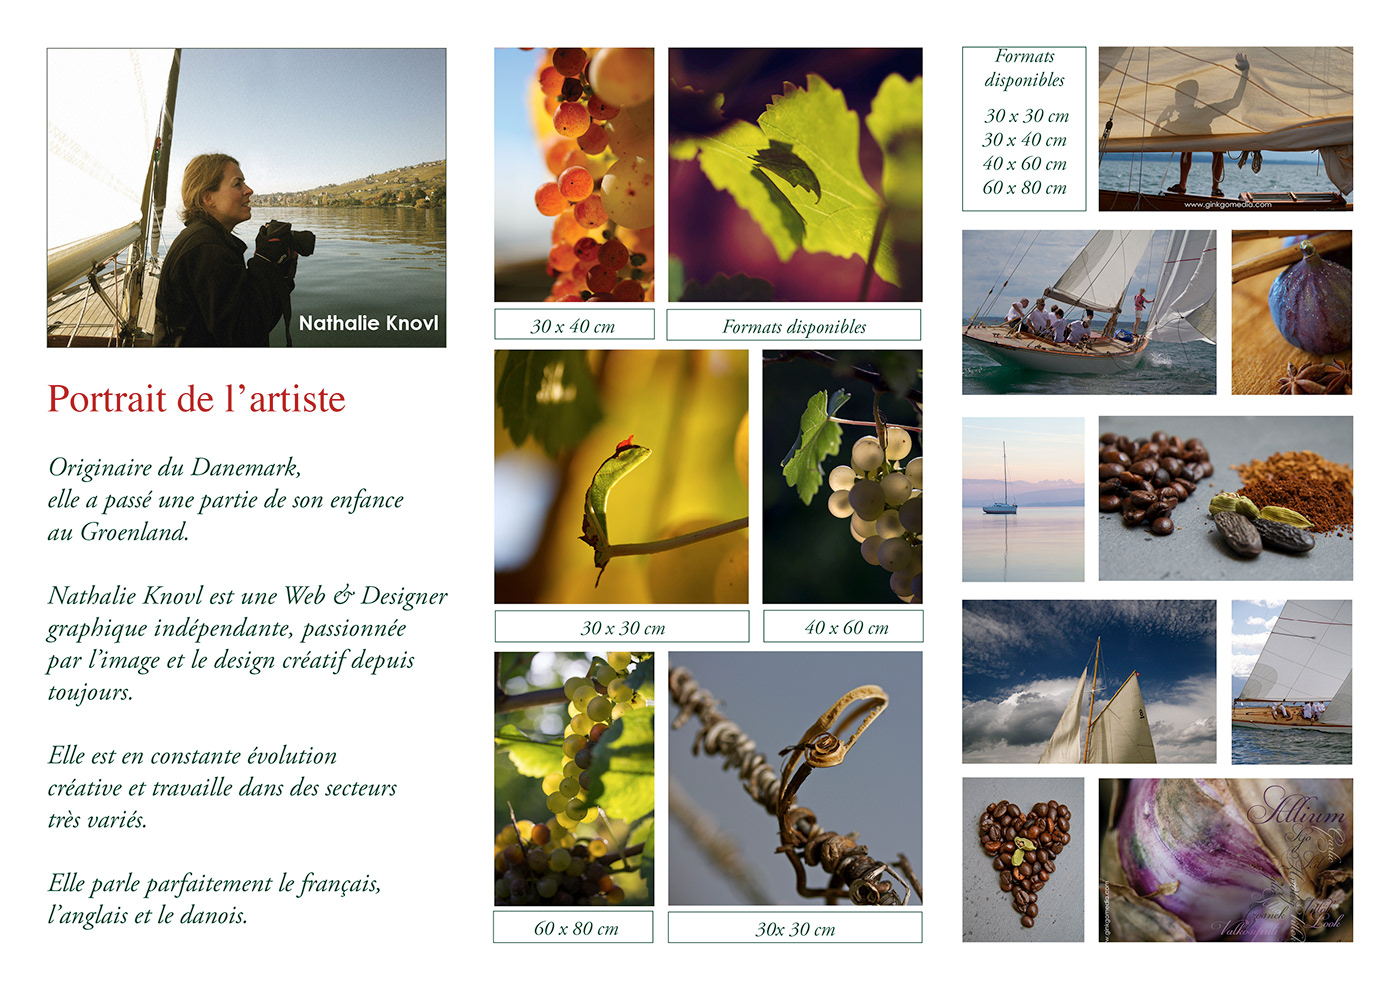 wine photo promotion work winery Photography  Layout Design brochure marketing   Advertising  Yquem